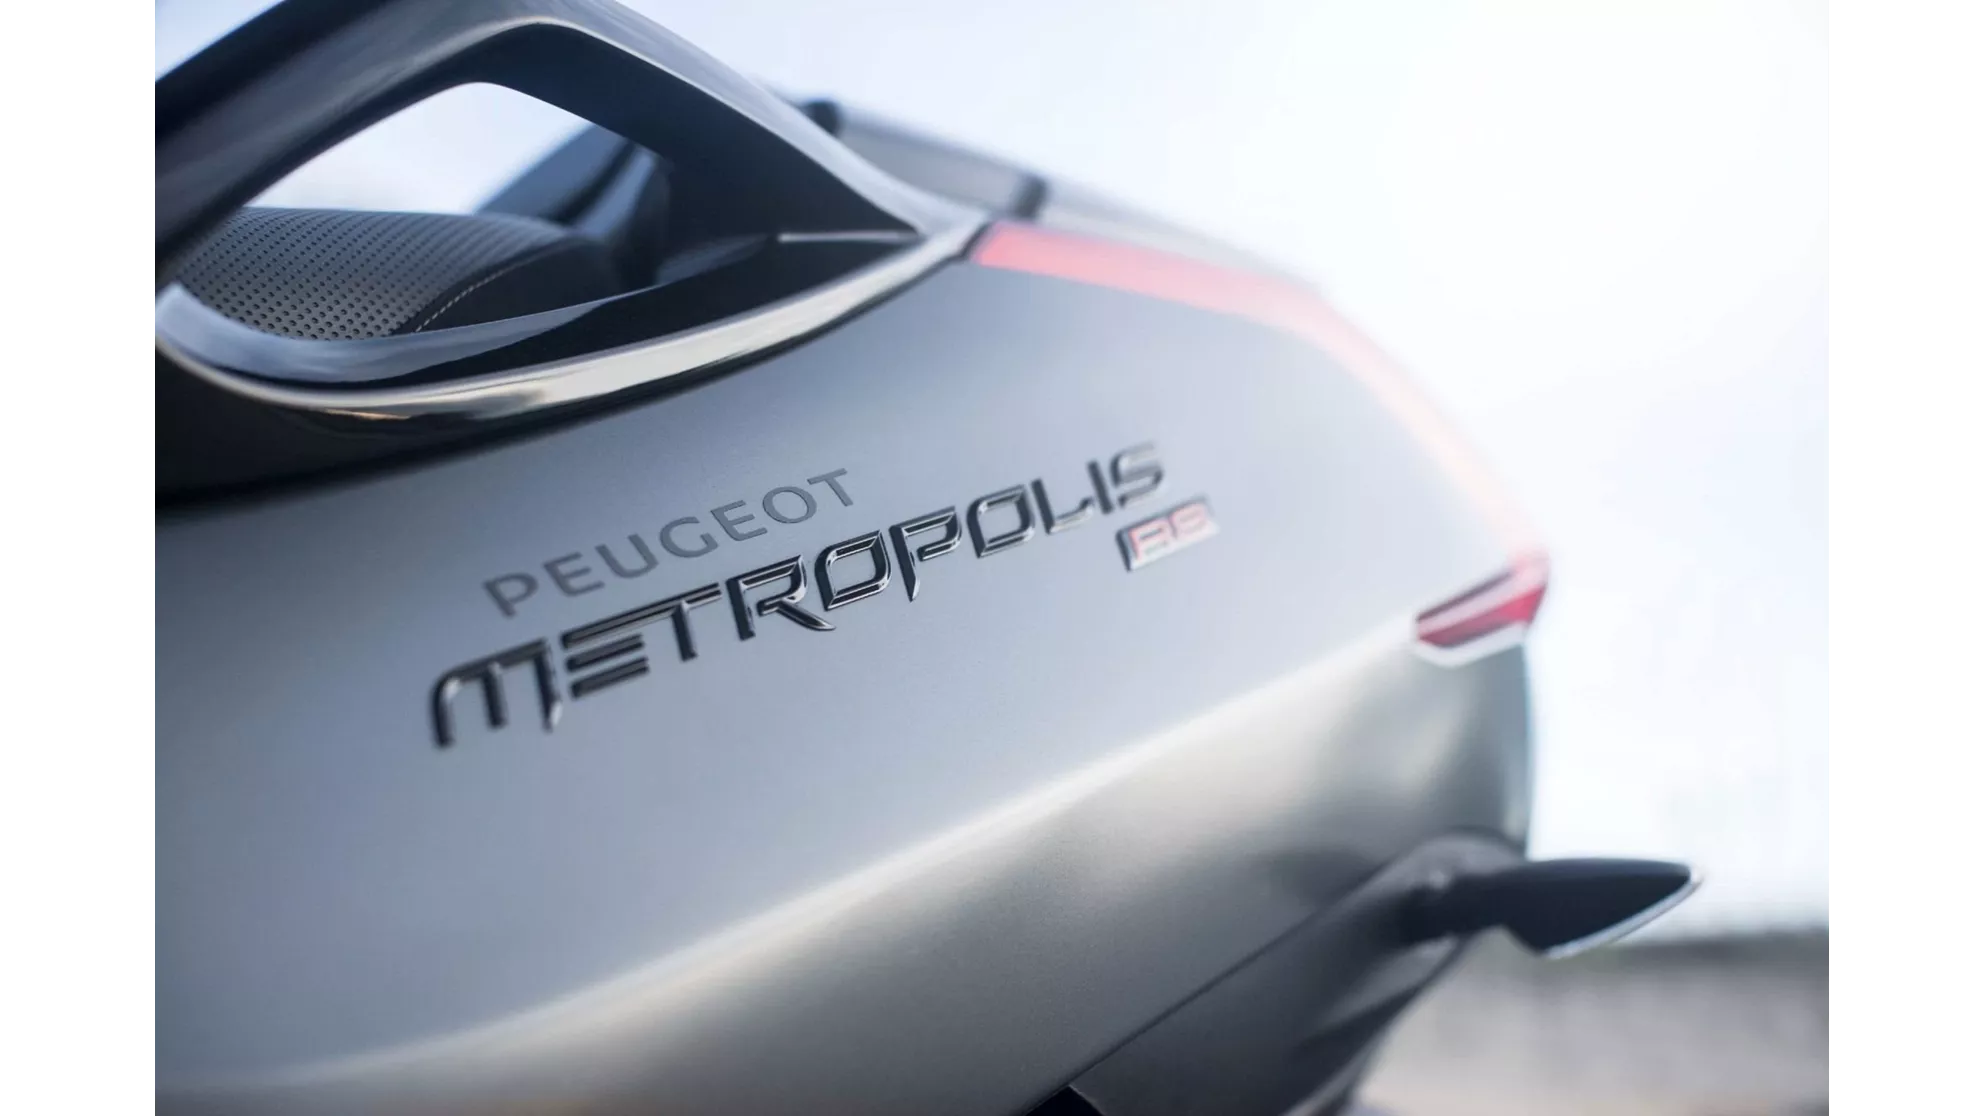 Peugeot Metropolis 400i RS - Imagen 22